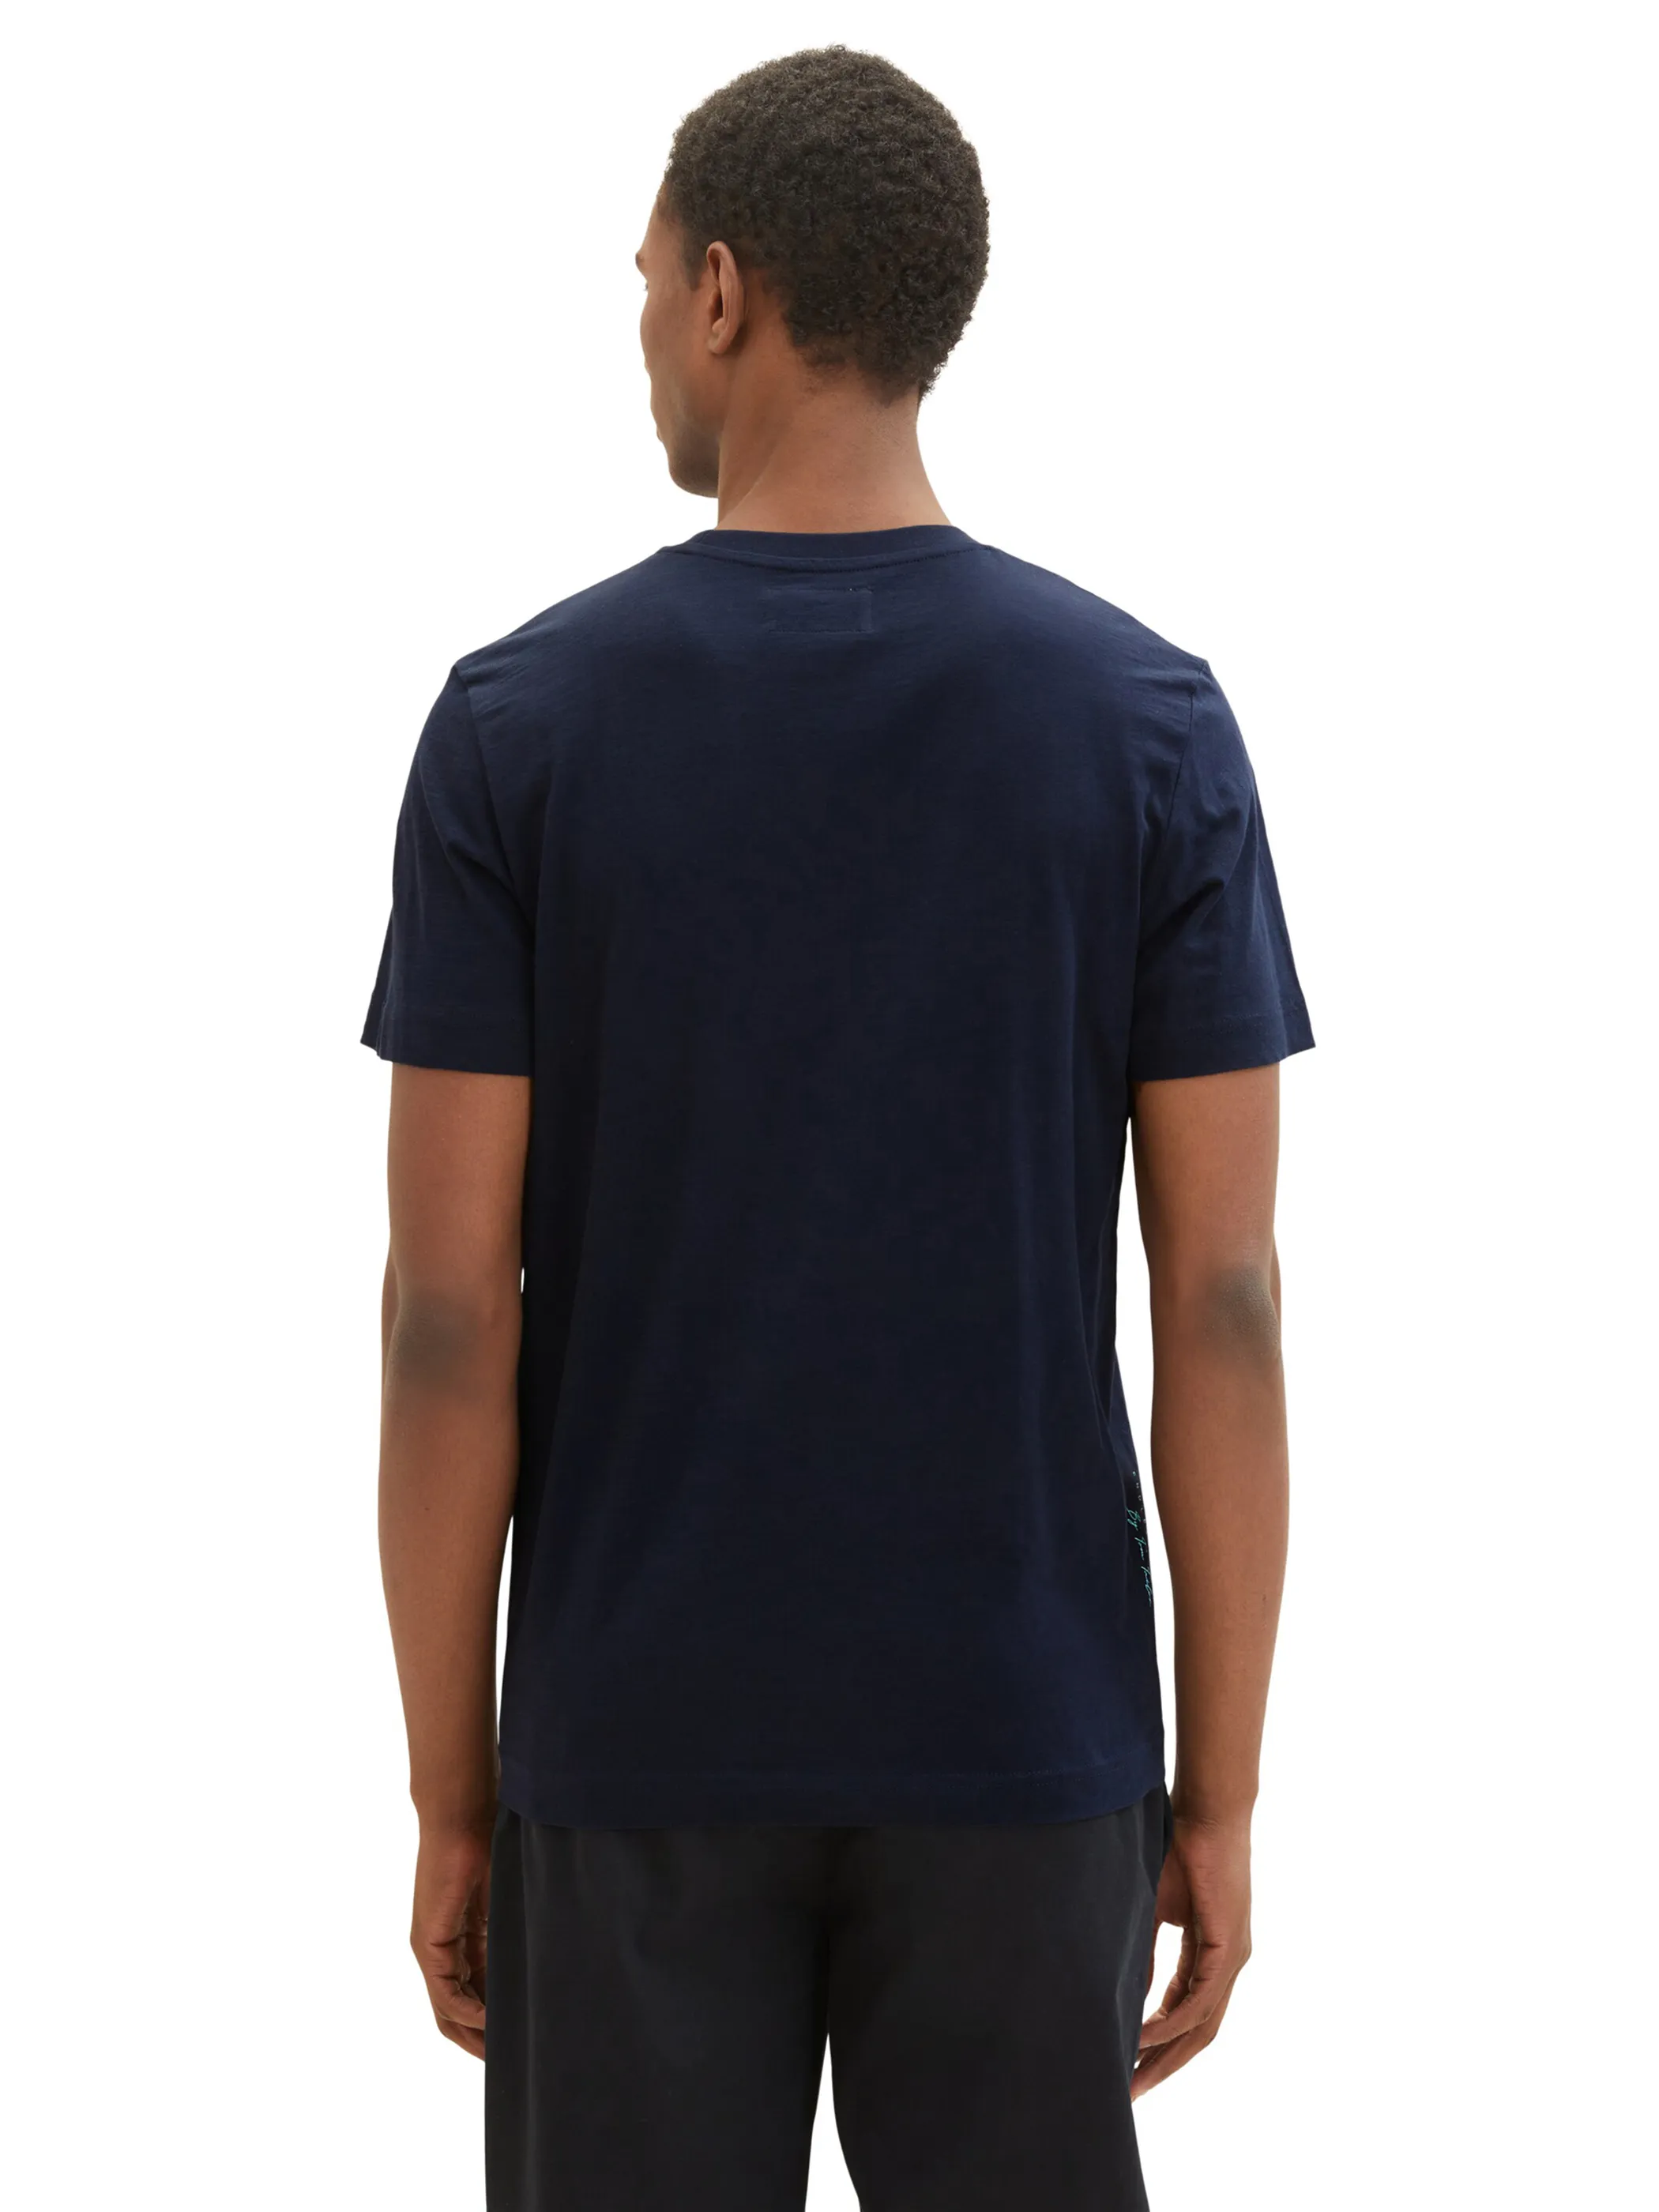 Tom Tailor 1036374 structured t-shirt Blau 880569 10668 2